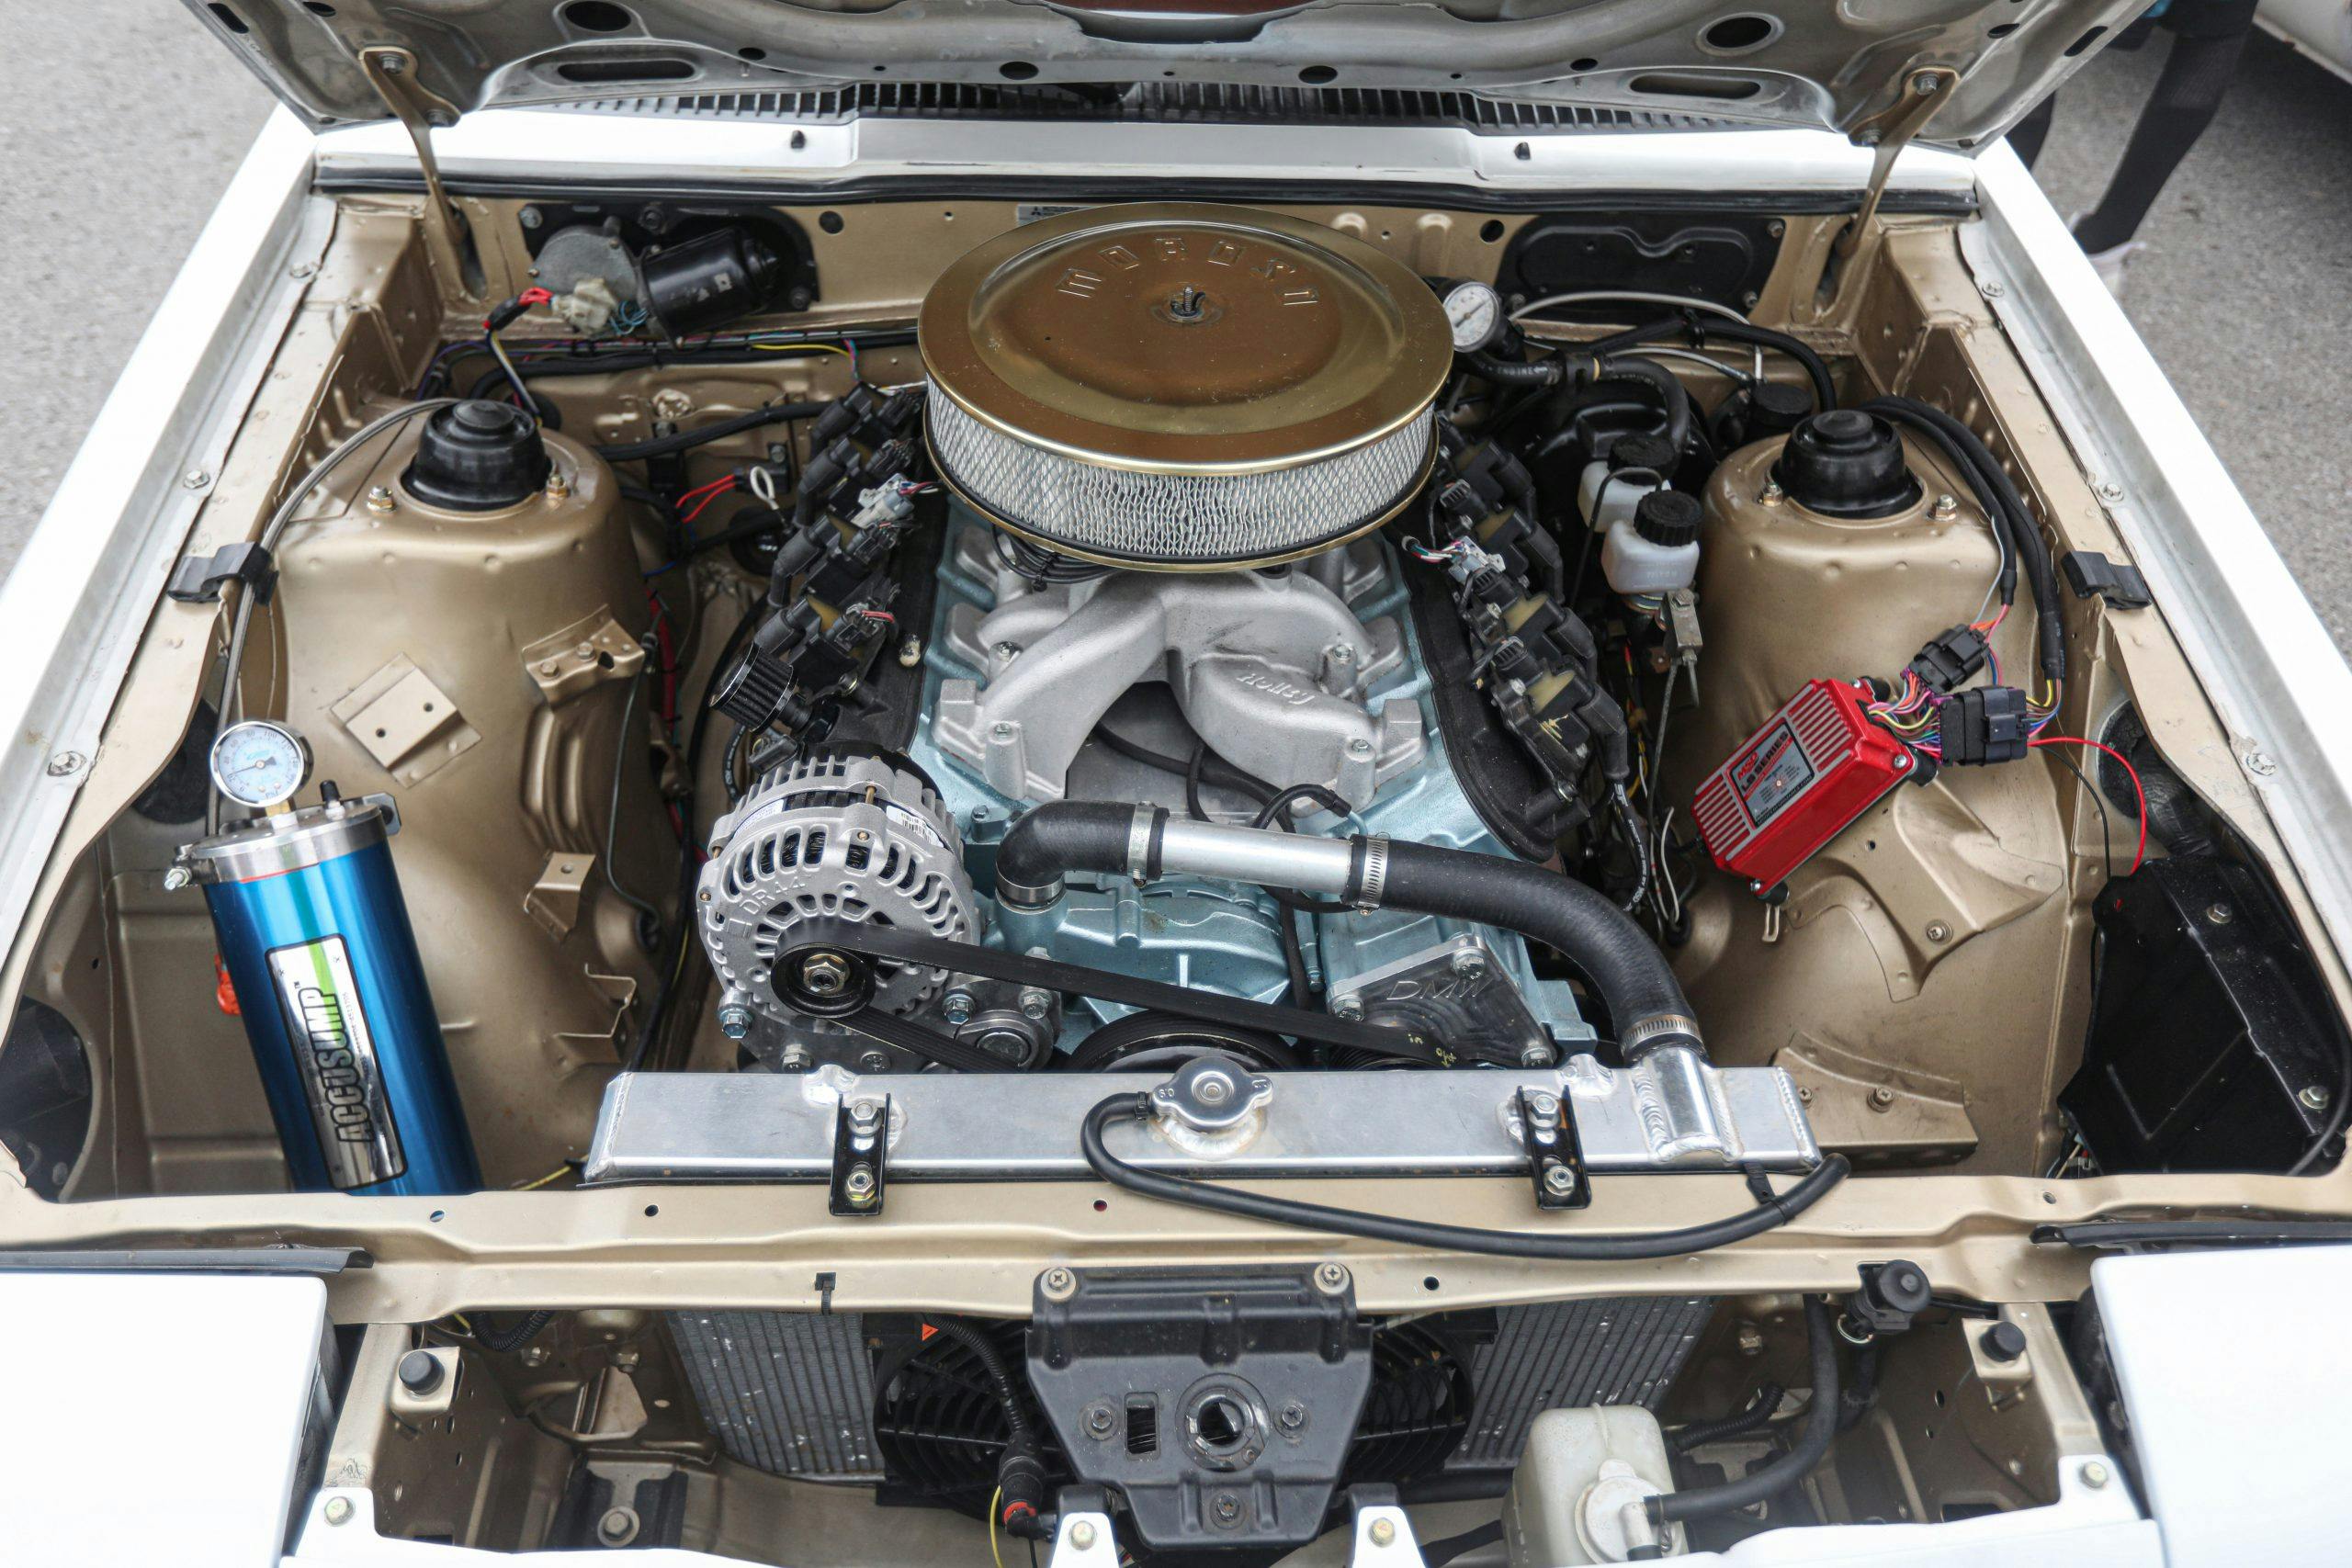 1989 Chrysler Conquest engine